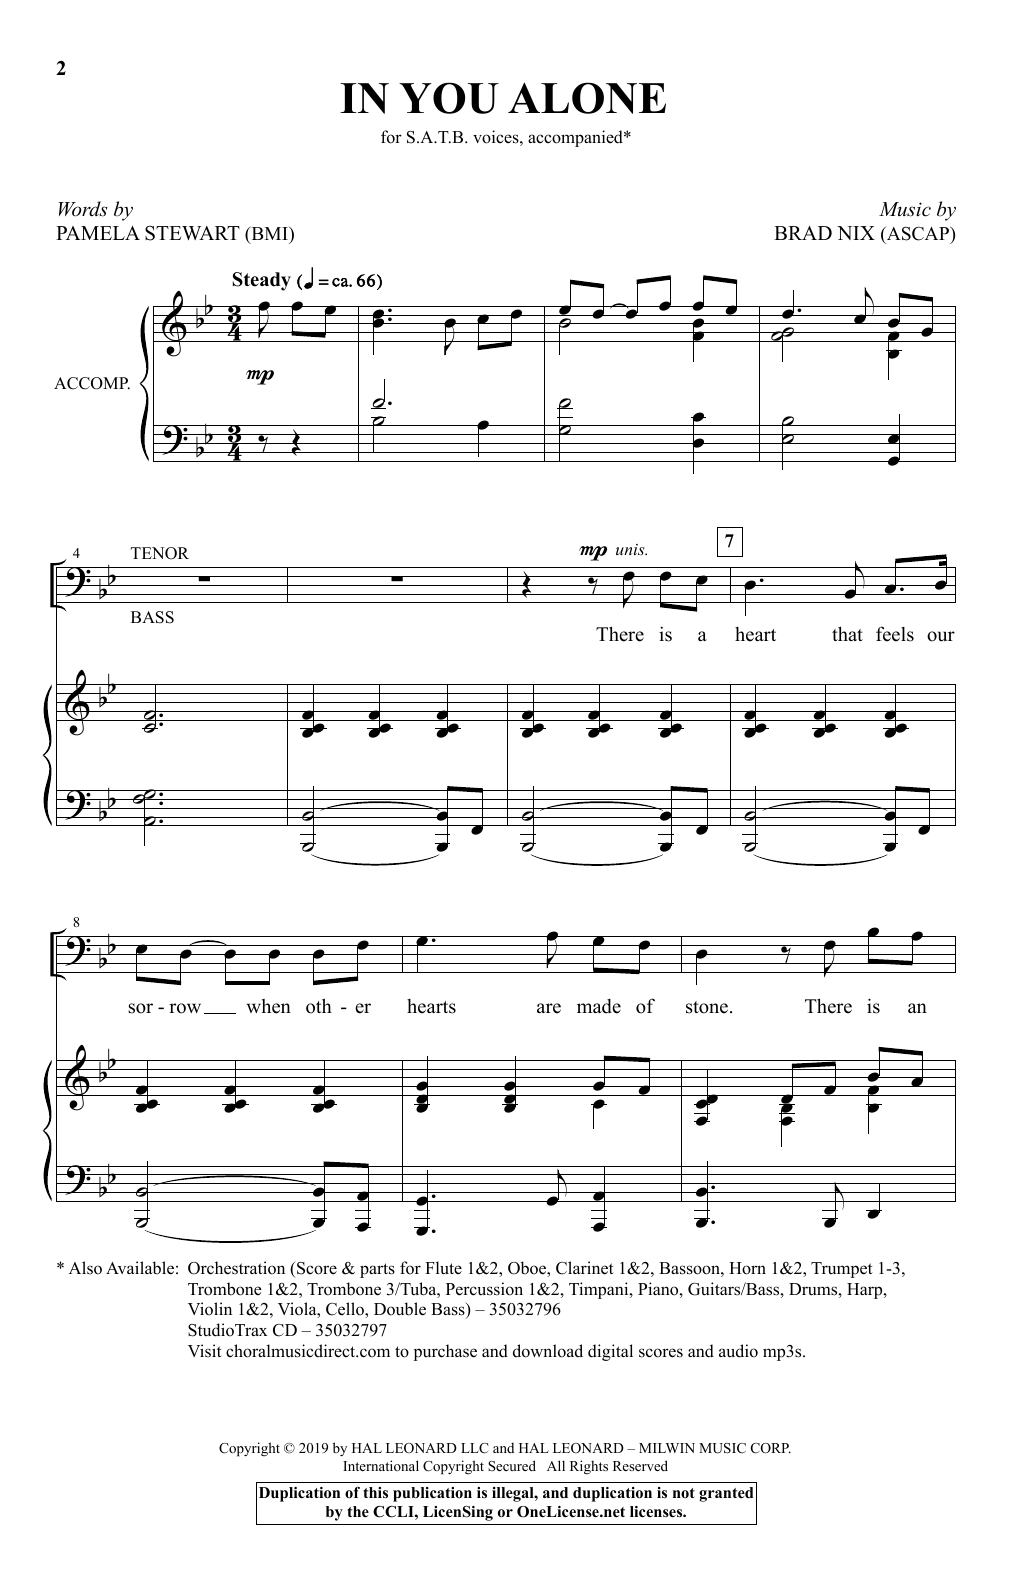 Pamela Stewart & Brad Nix In You Alone Sheet Music Notes & Chords for SATB Choir - Download or Print PDF